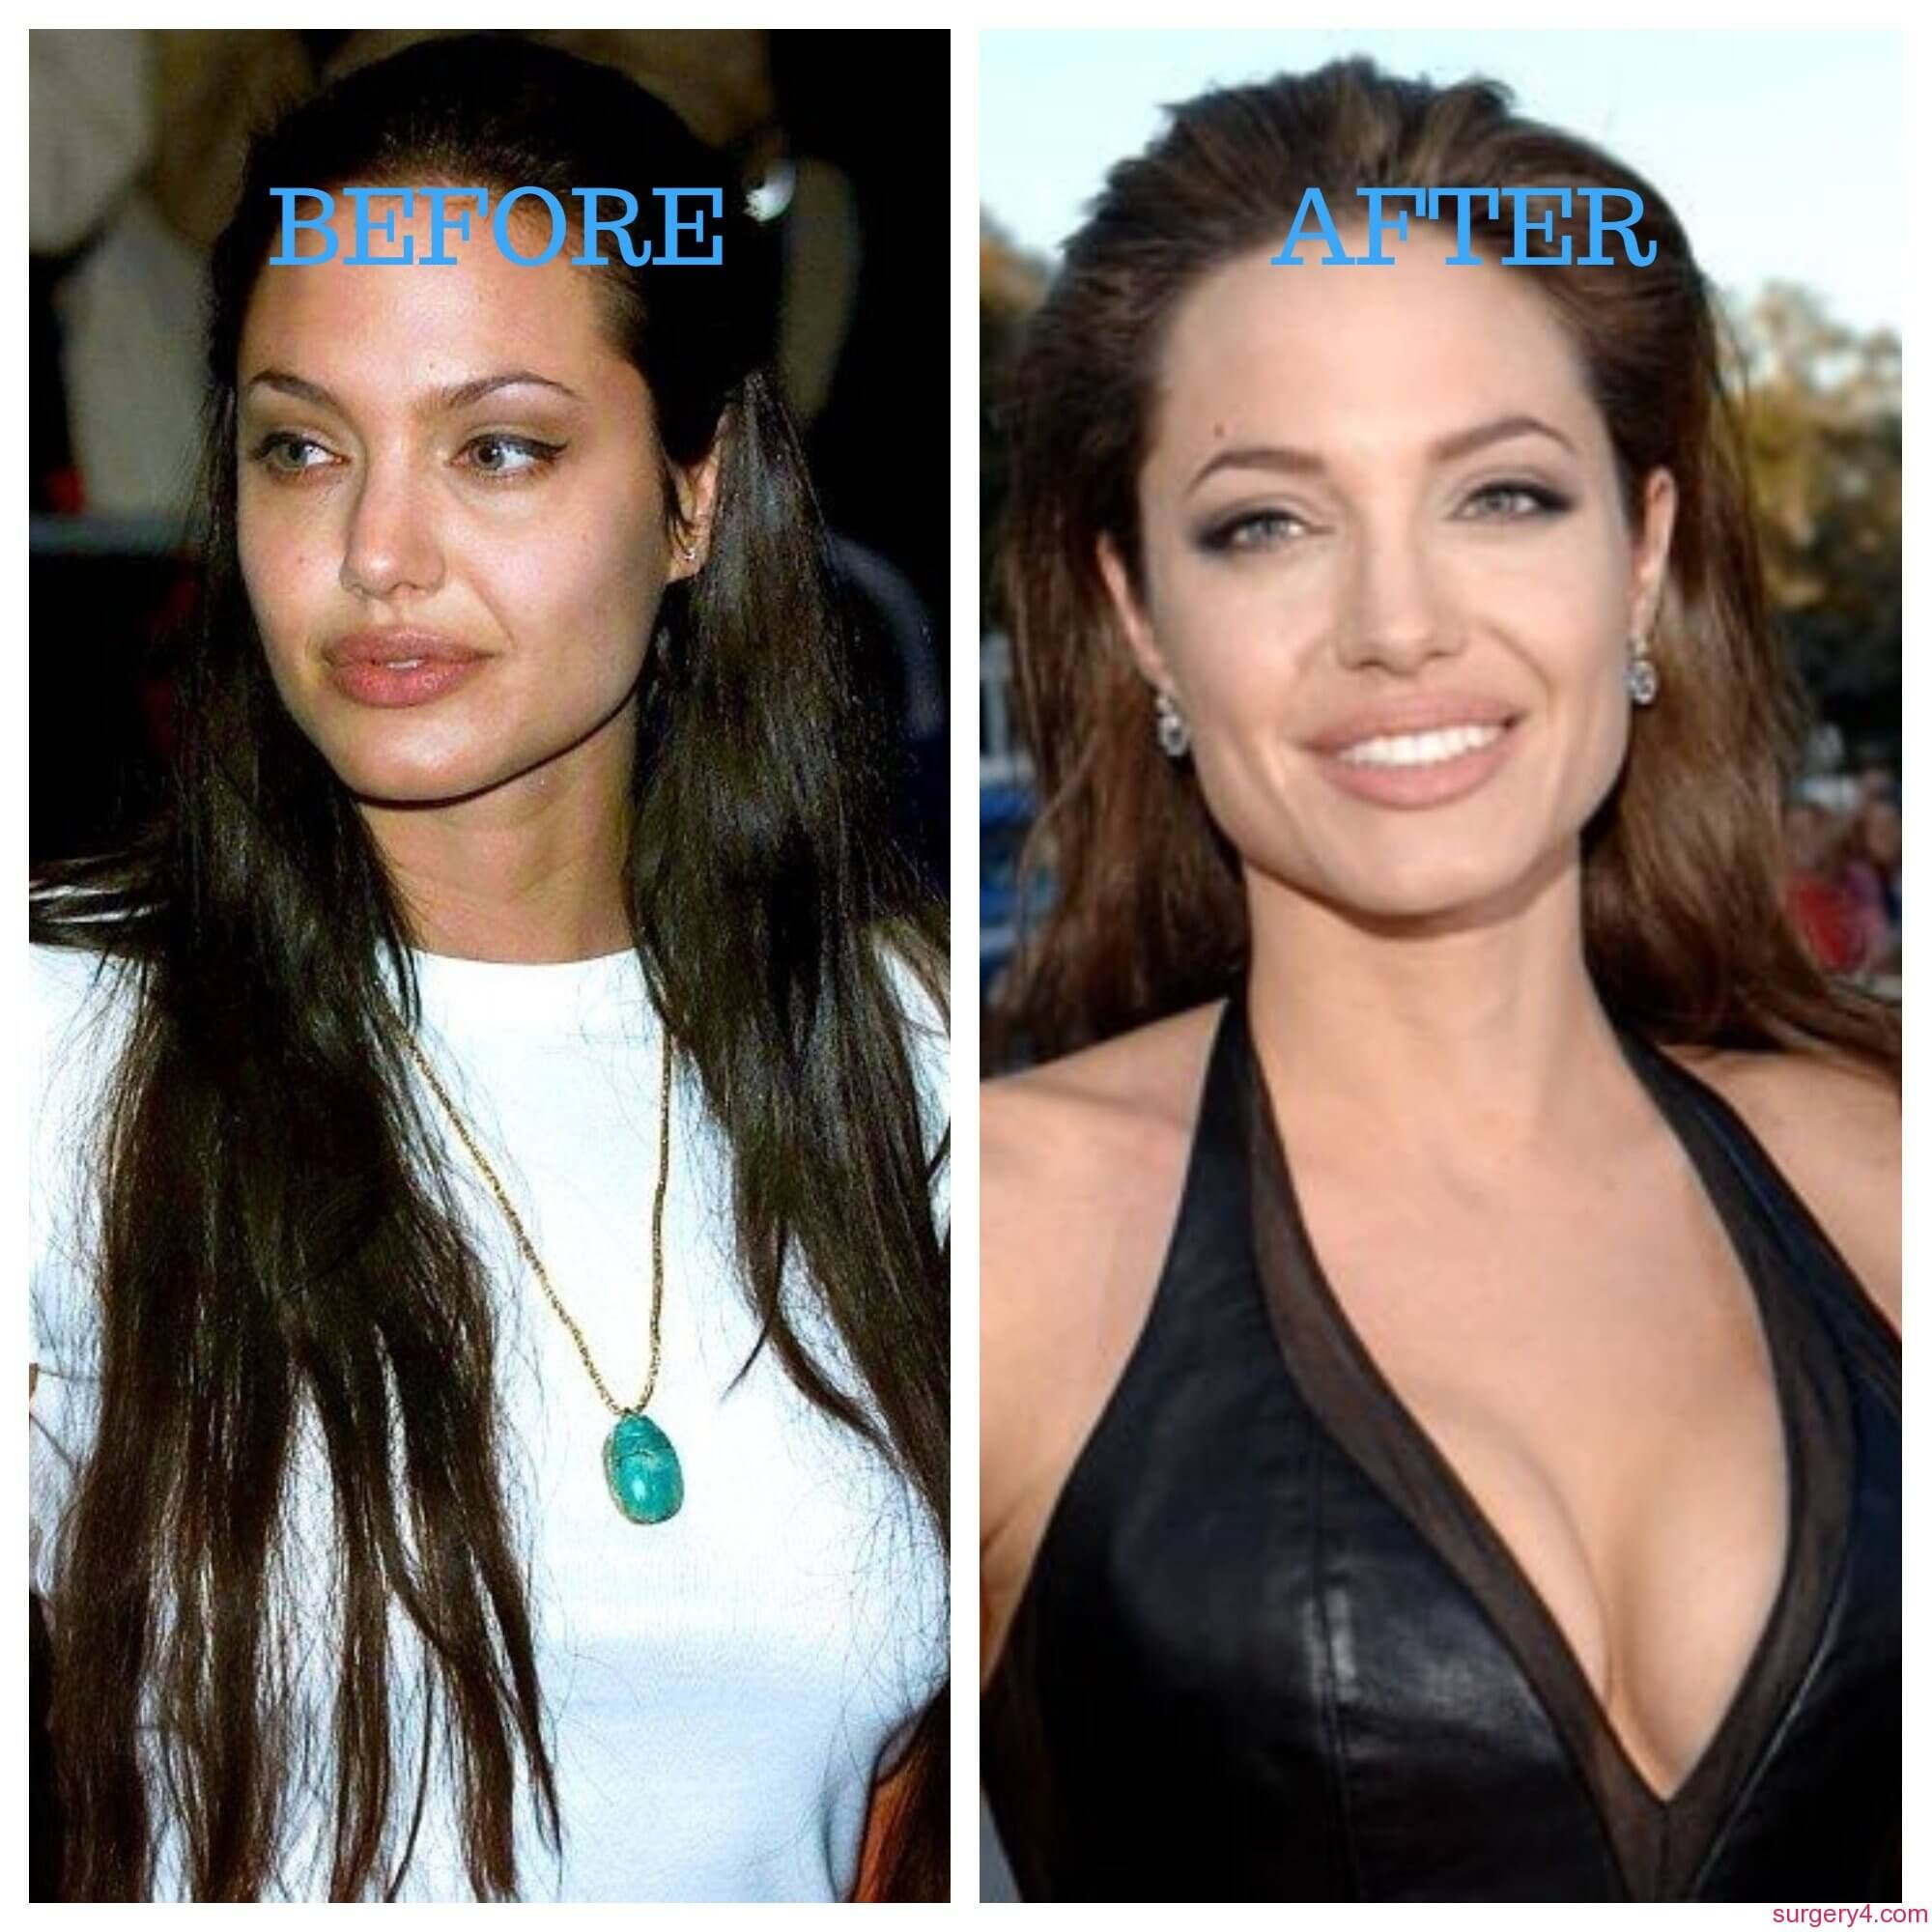 Seth Macfarlane Plastic Surgery Photos [Before & After] ⋆